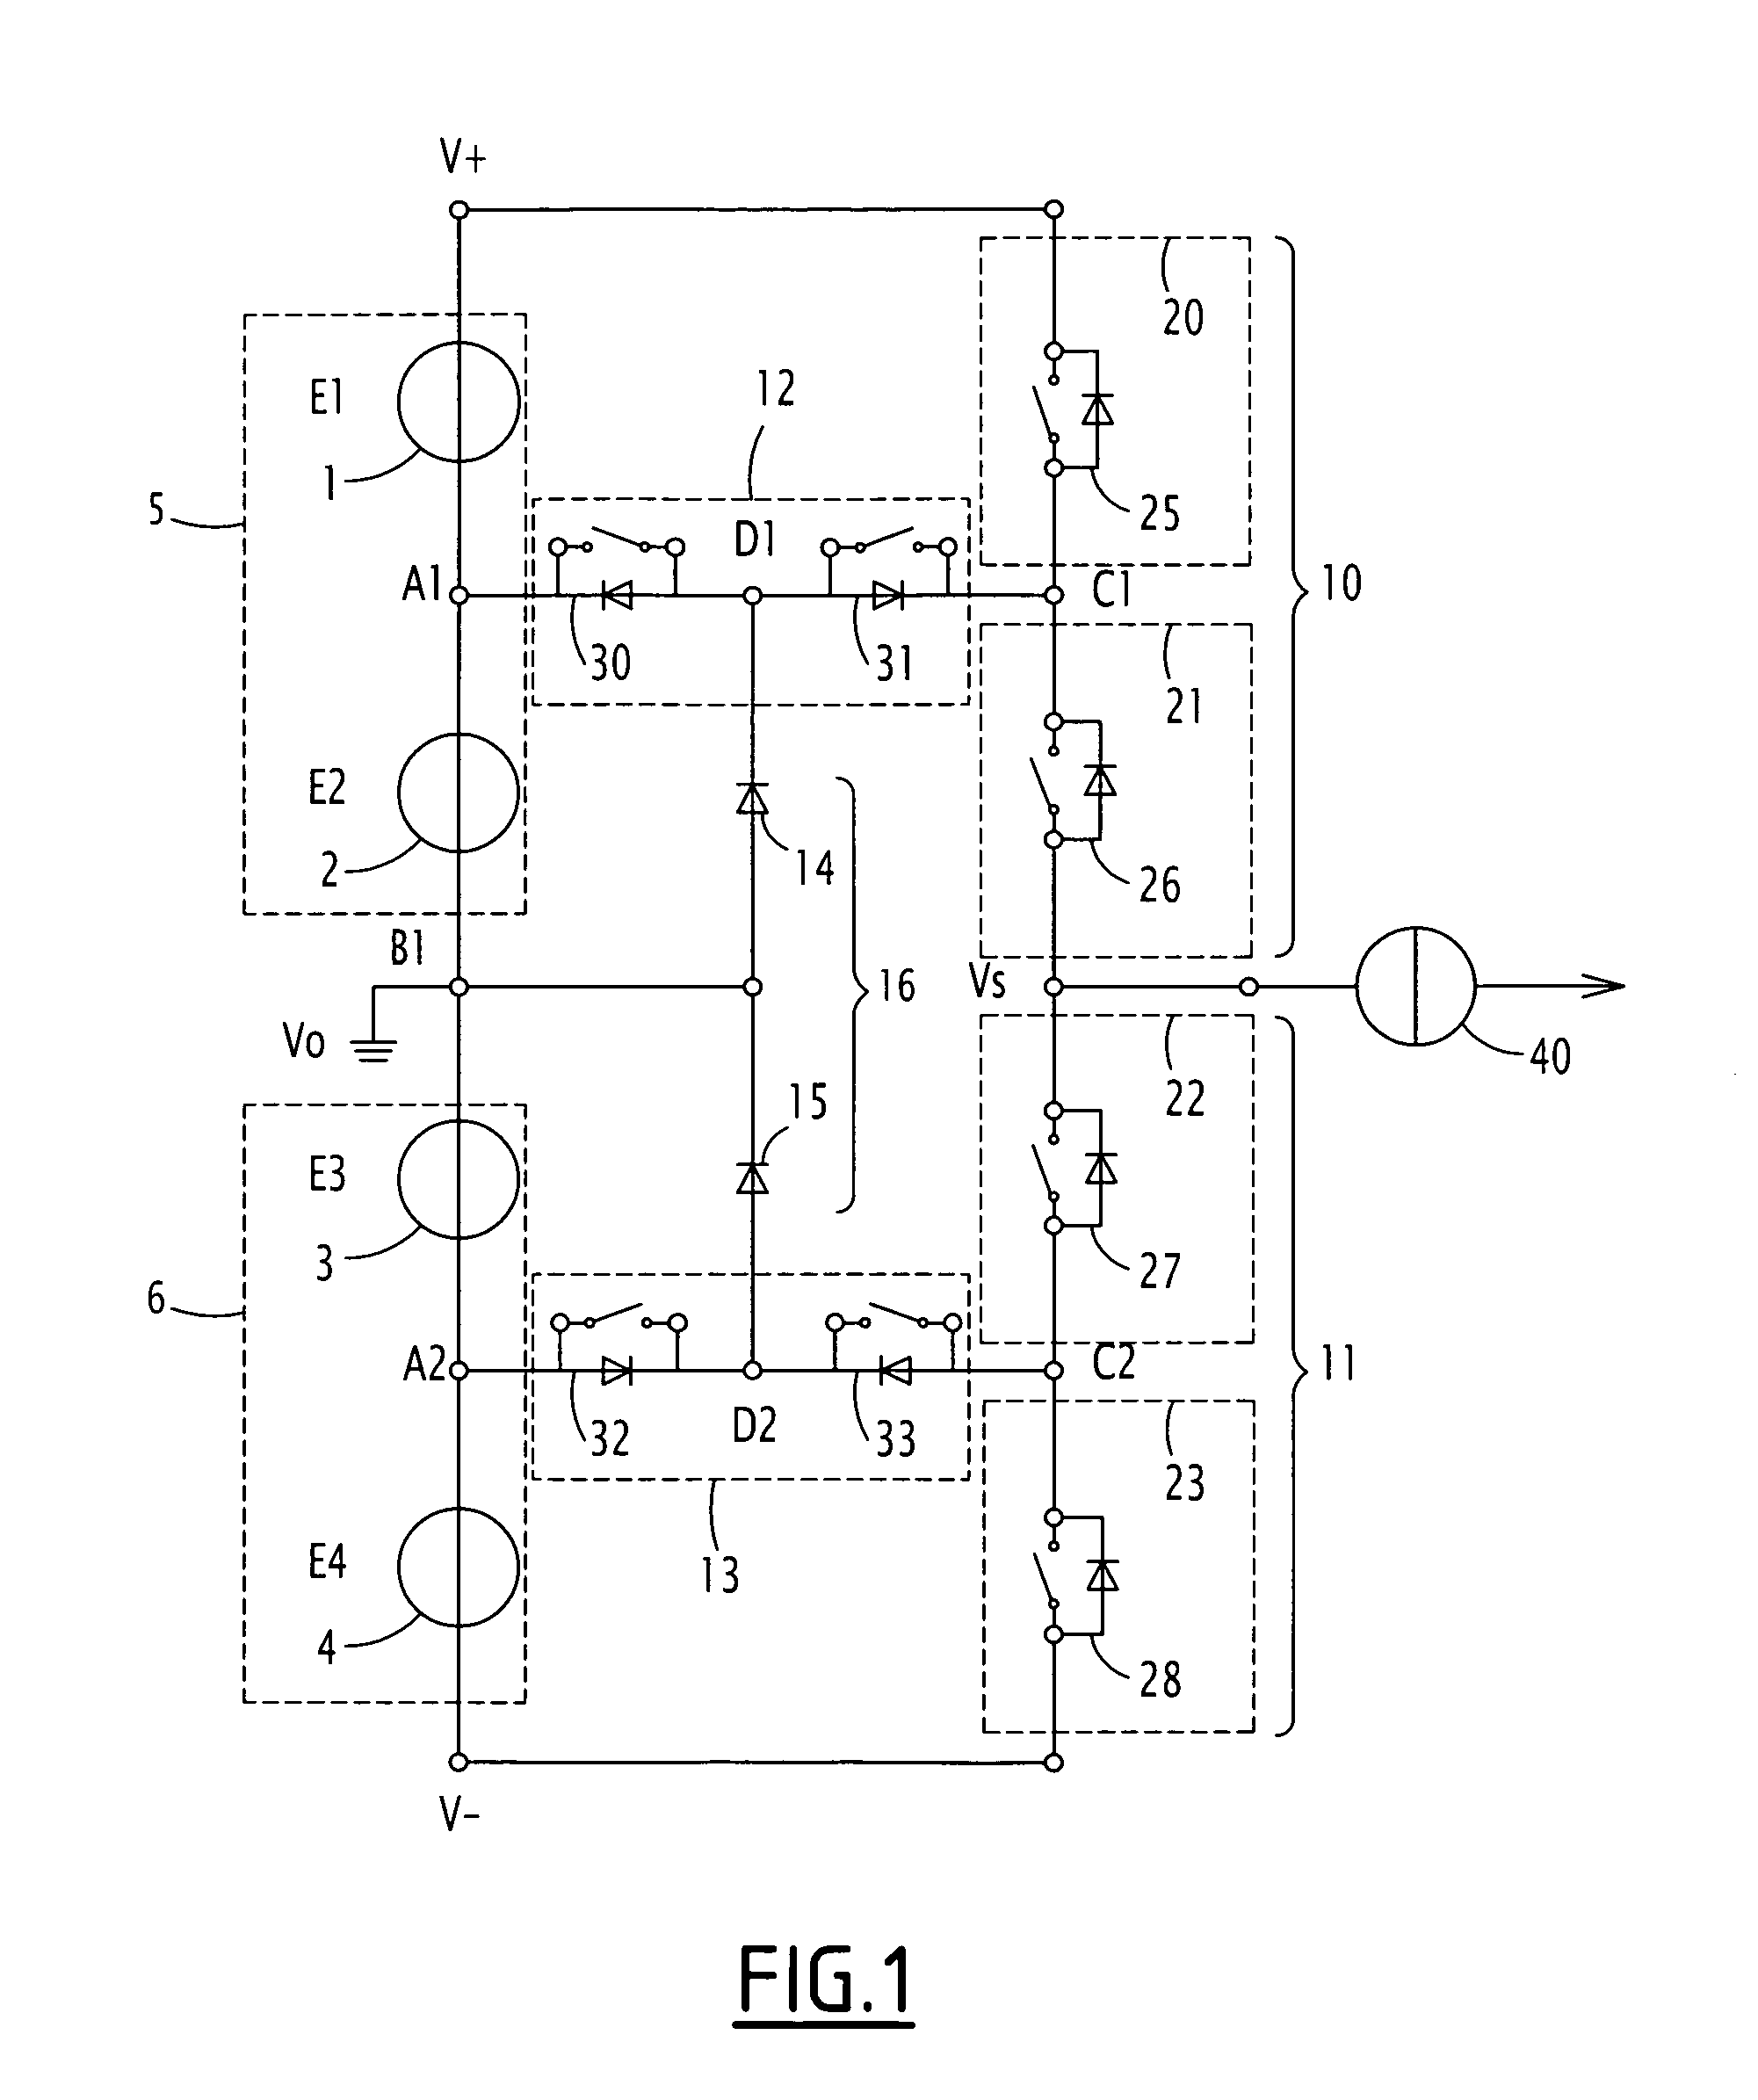 3N-4-level voltage inverter